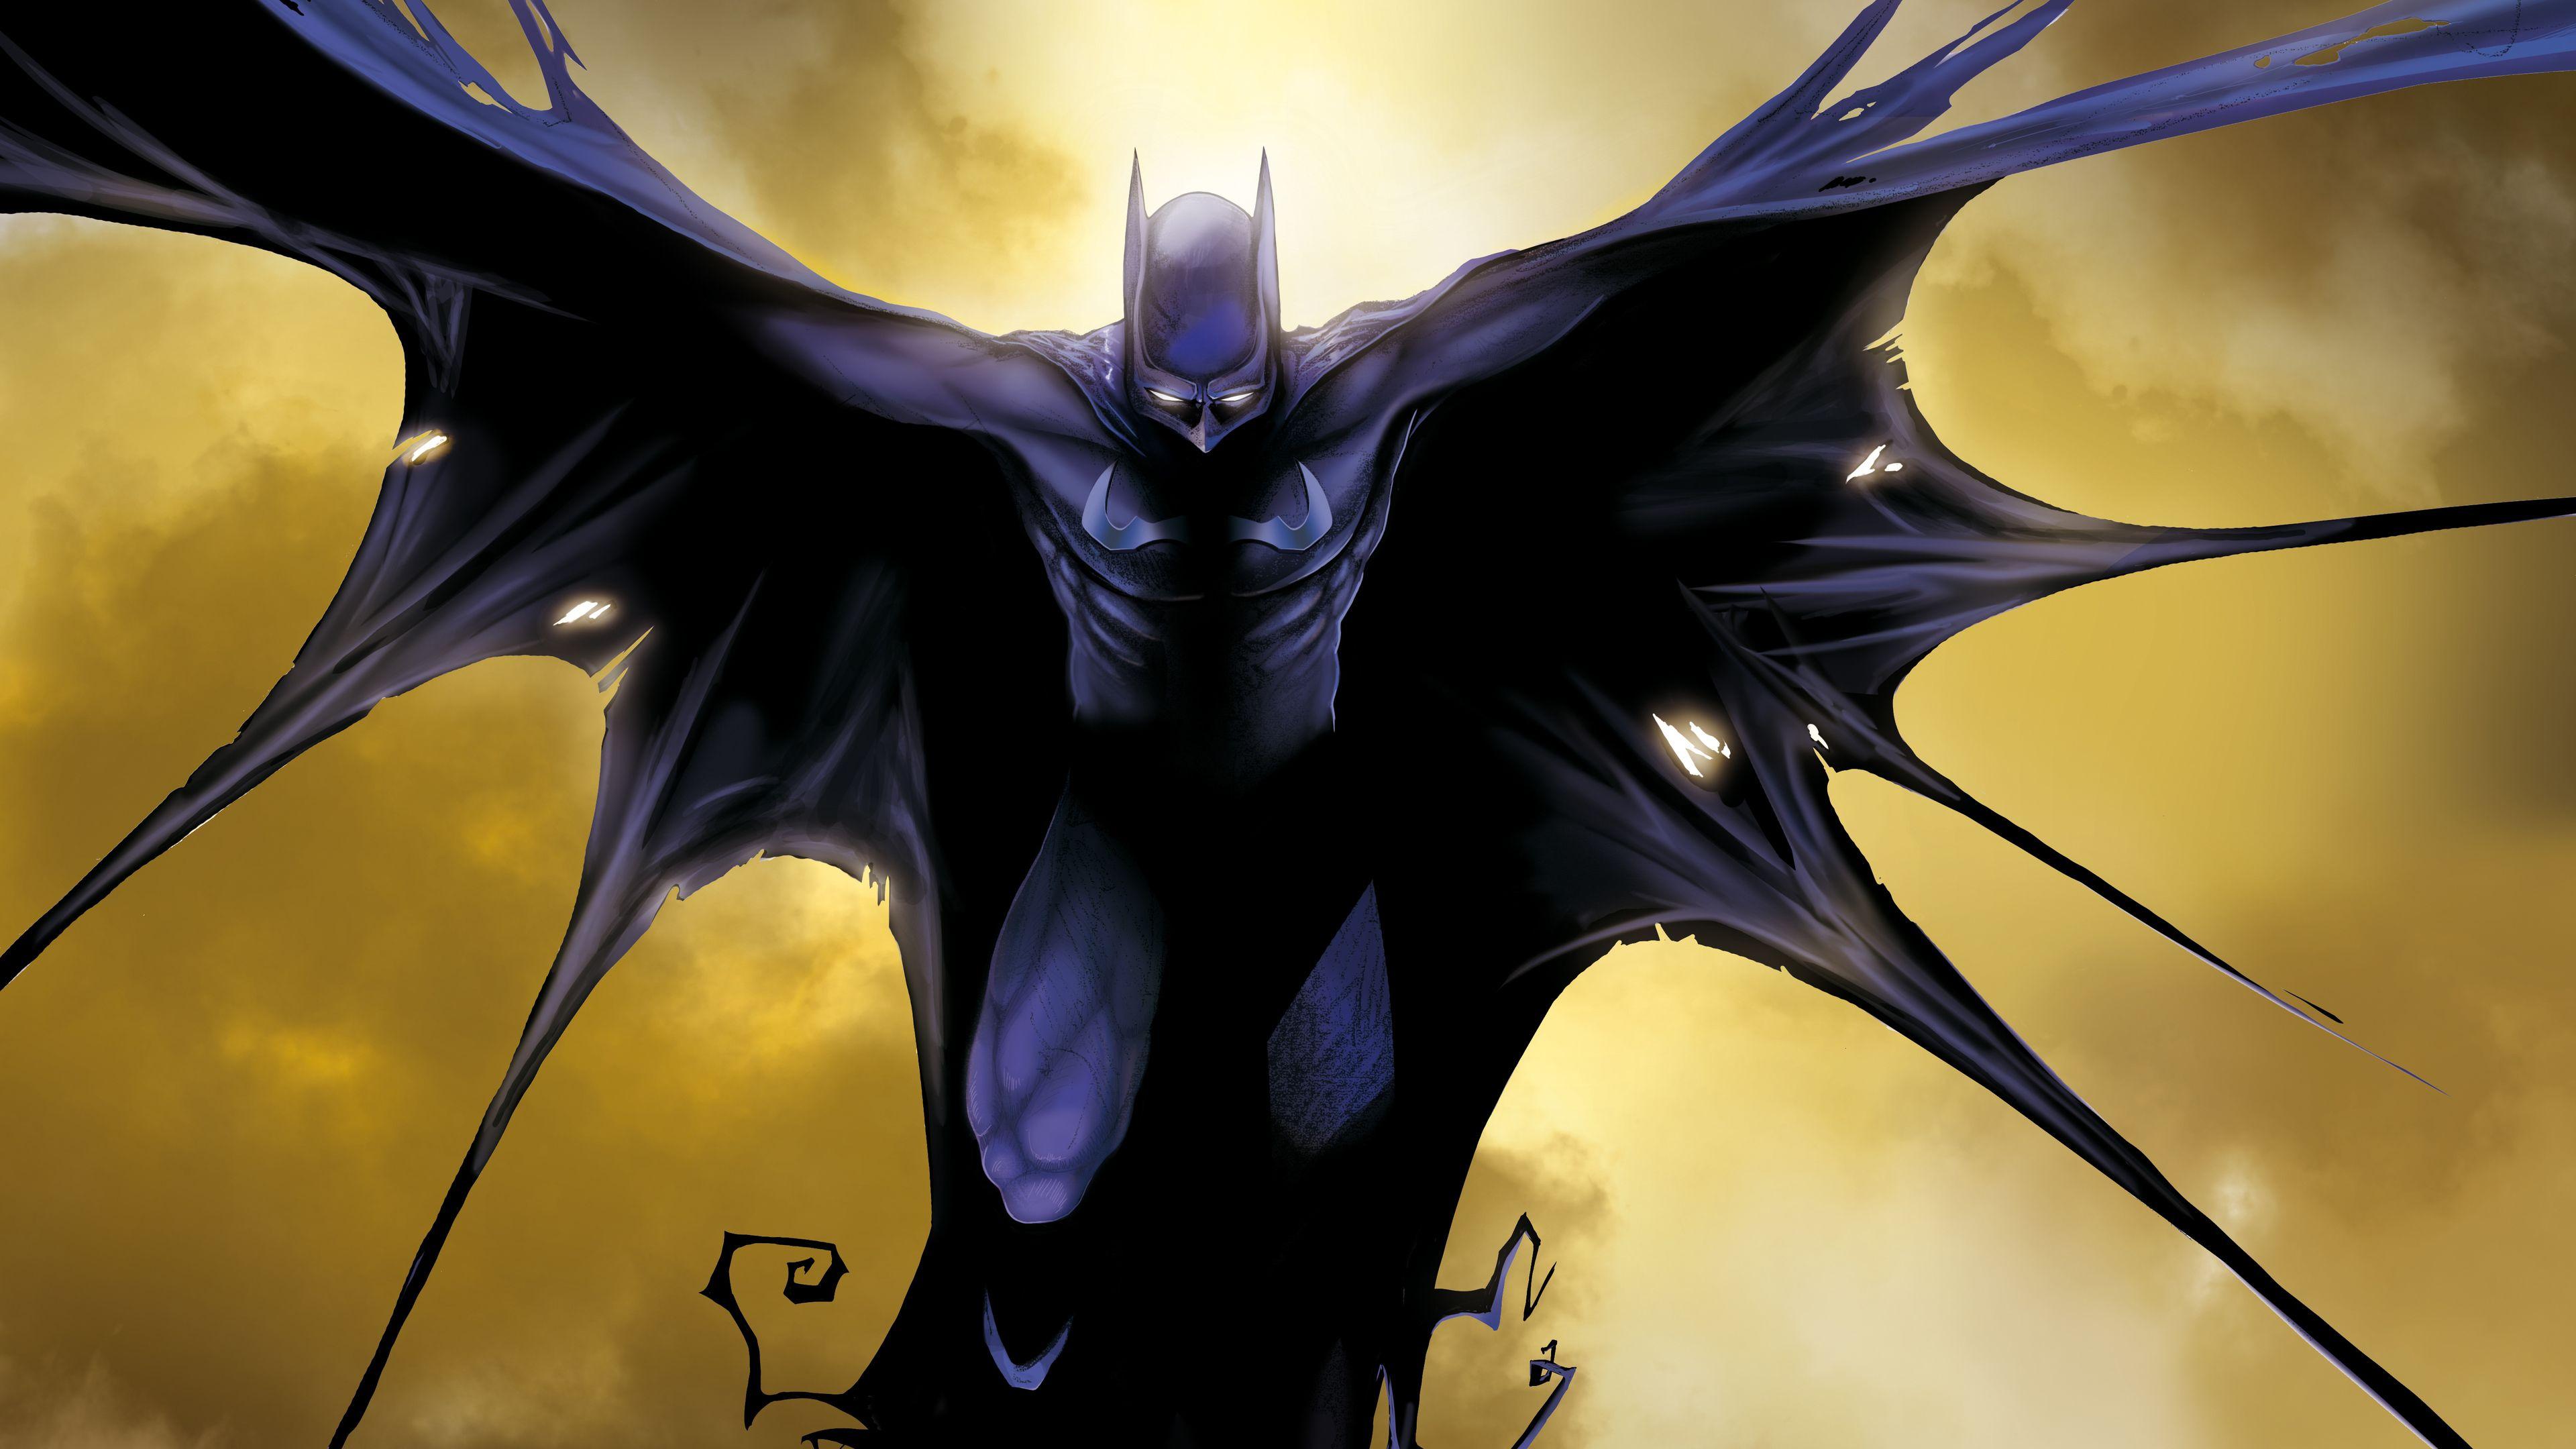 Batman Illustration 4k 2018 superheroes wallpaper, HD